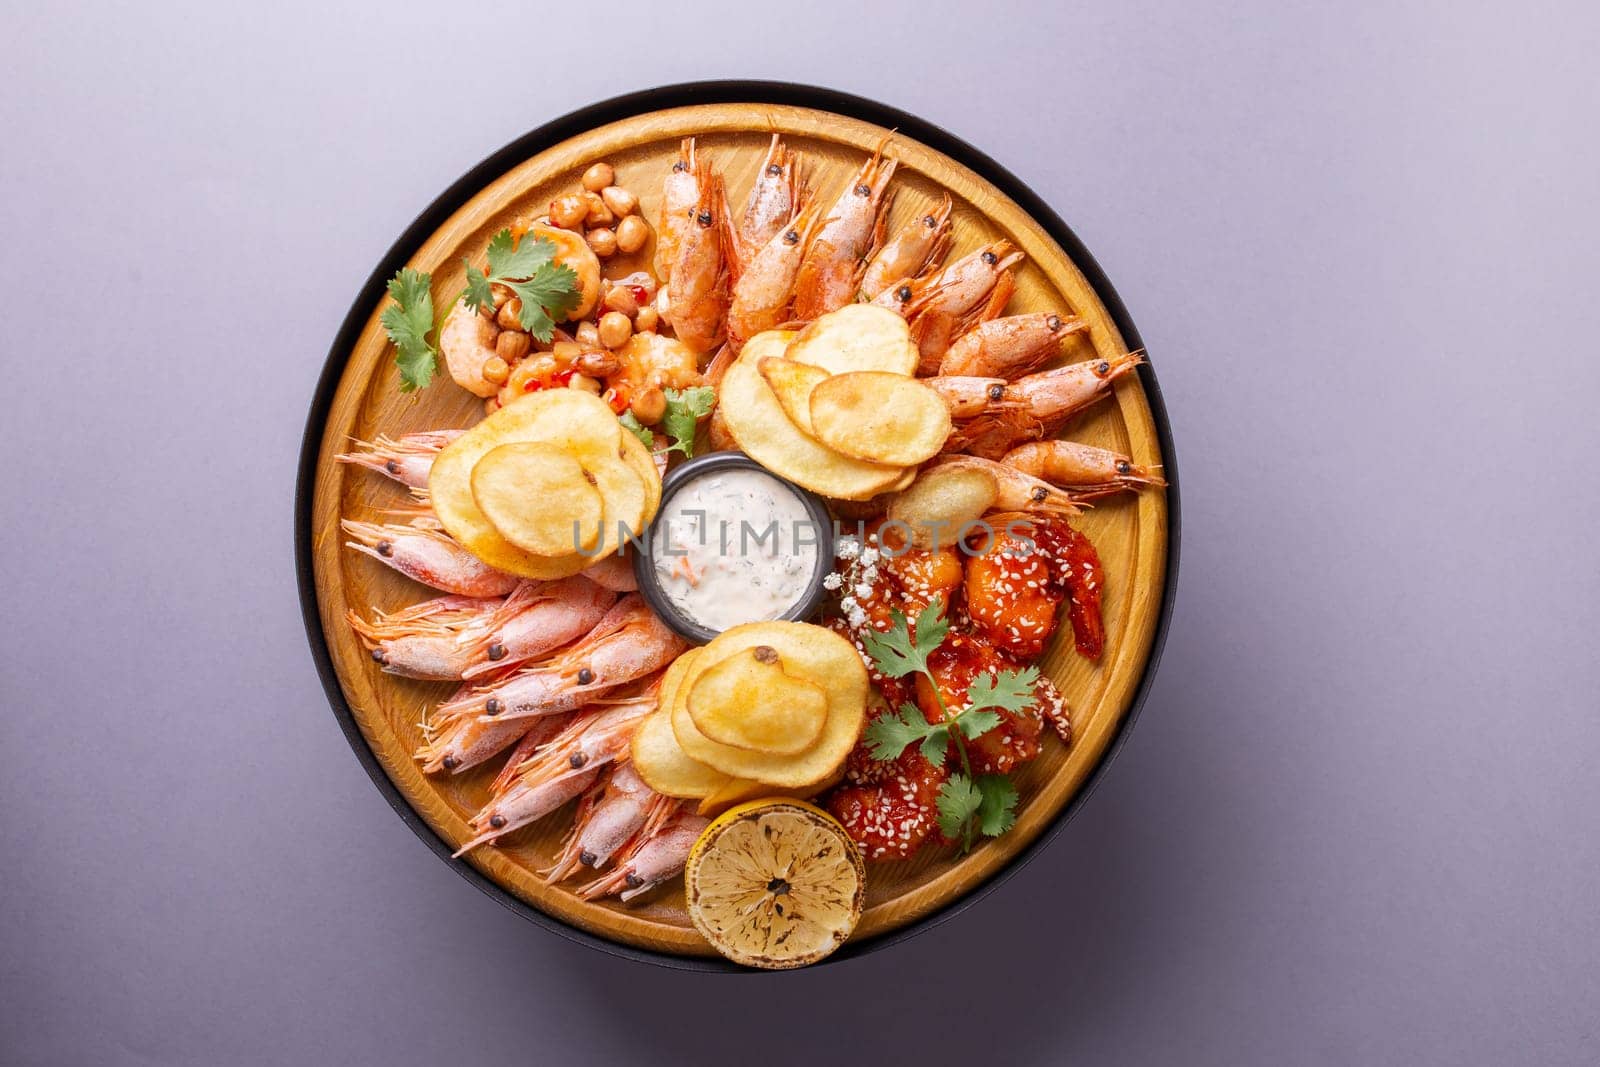 Fresh seafood platter with shrimps, lemon, and potato chips. by Pukhovskiy